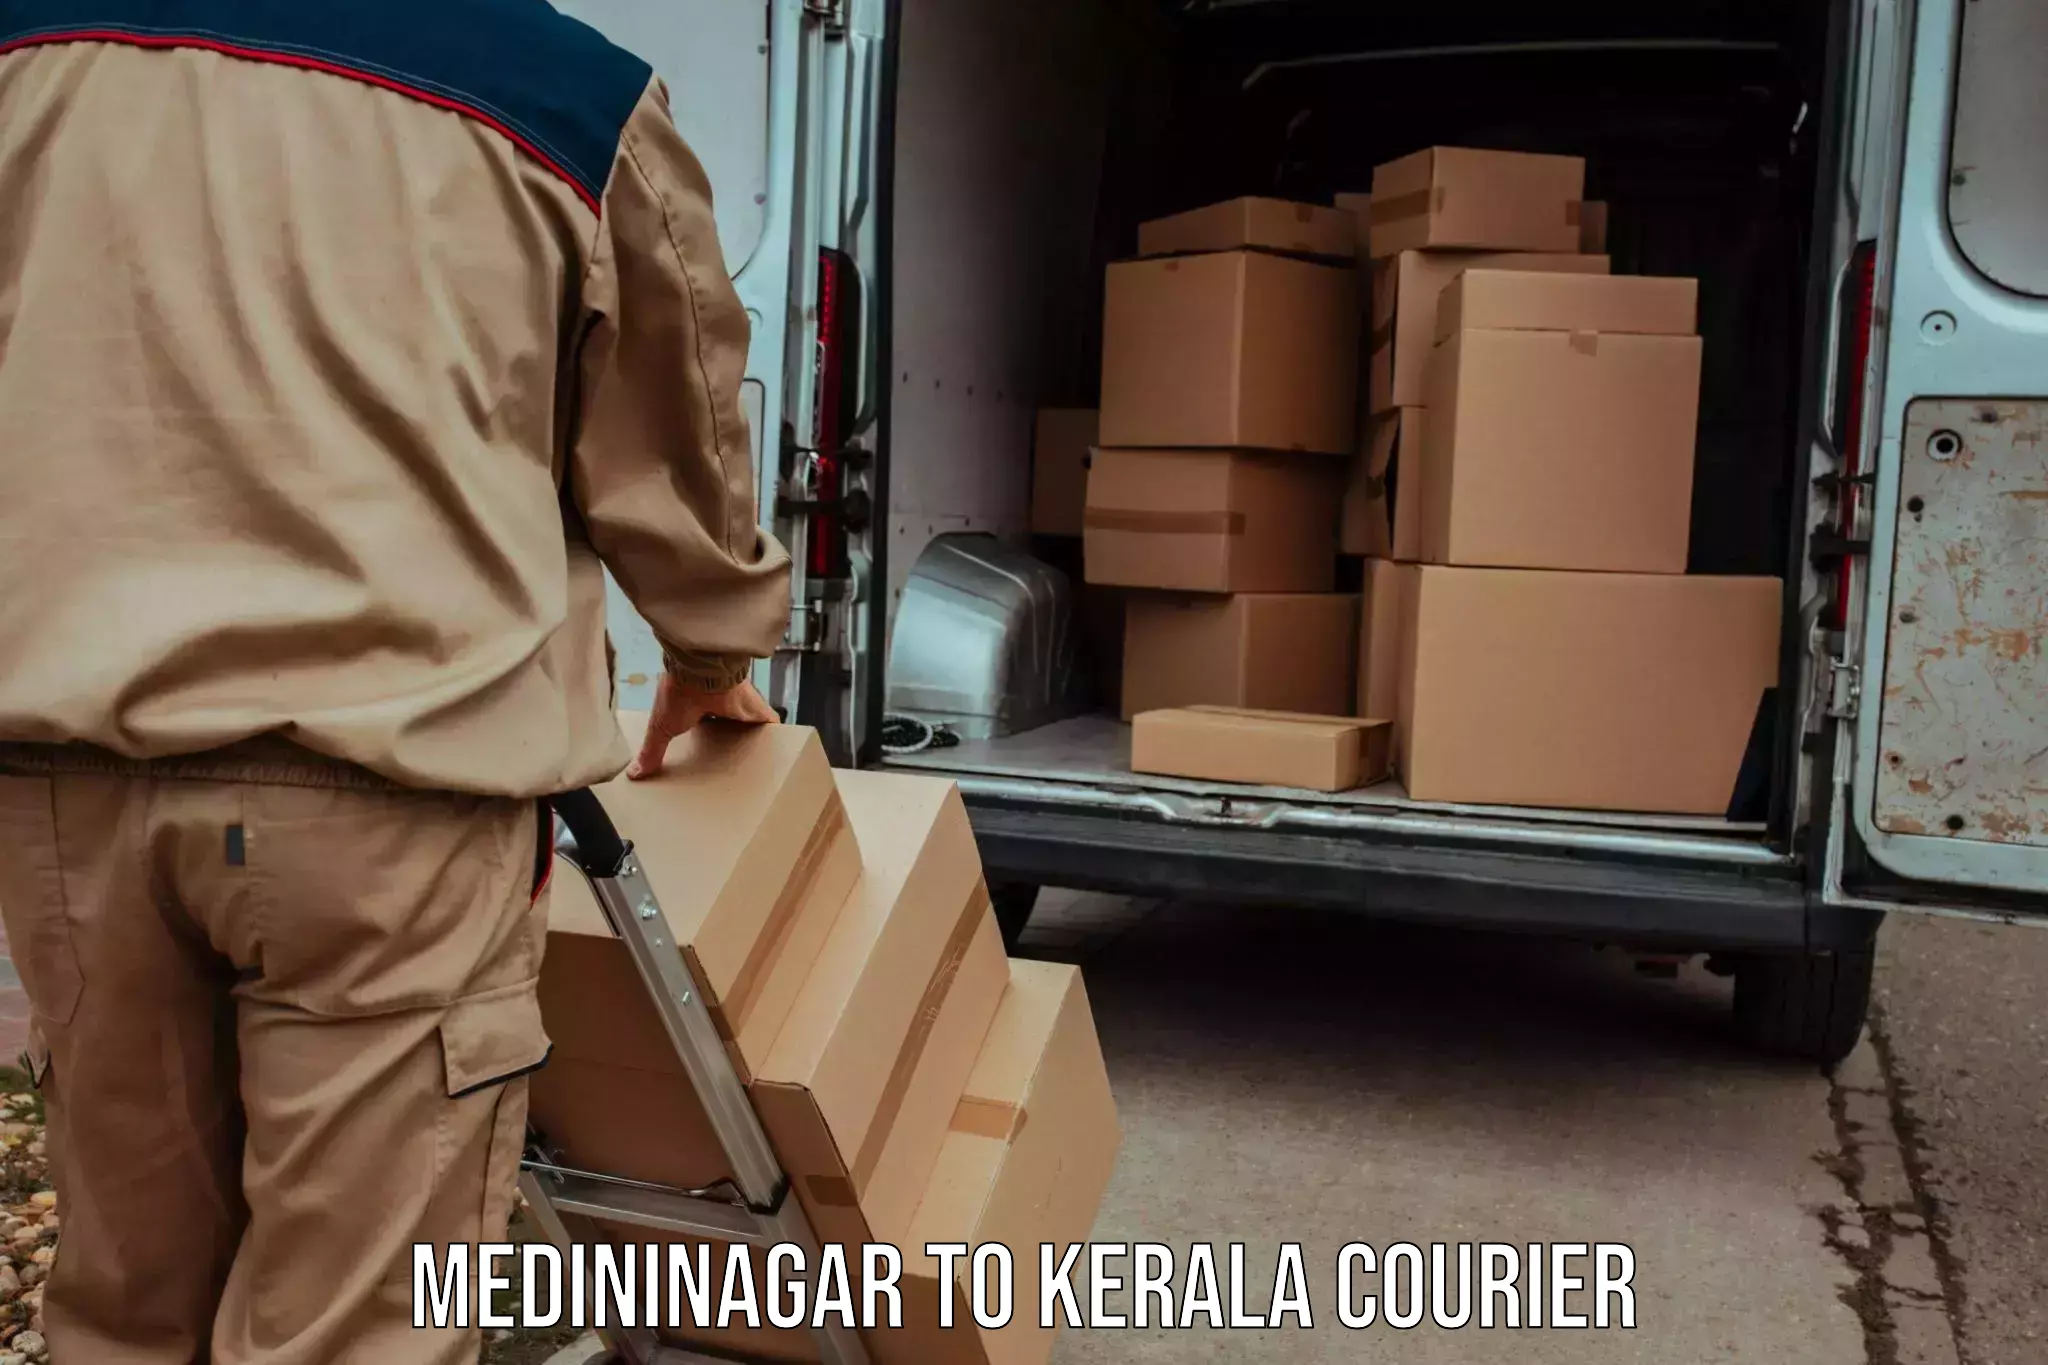 Courier service partnerships Medininagar to Ponekkara